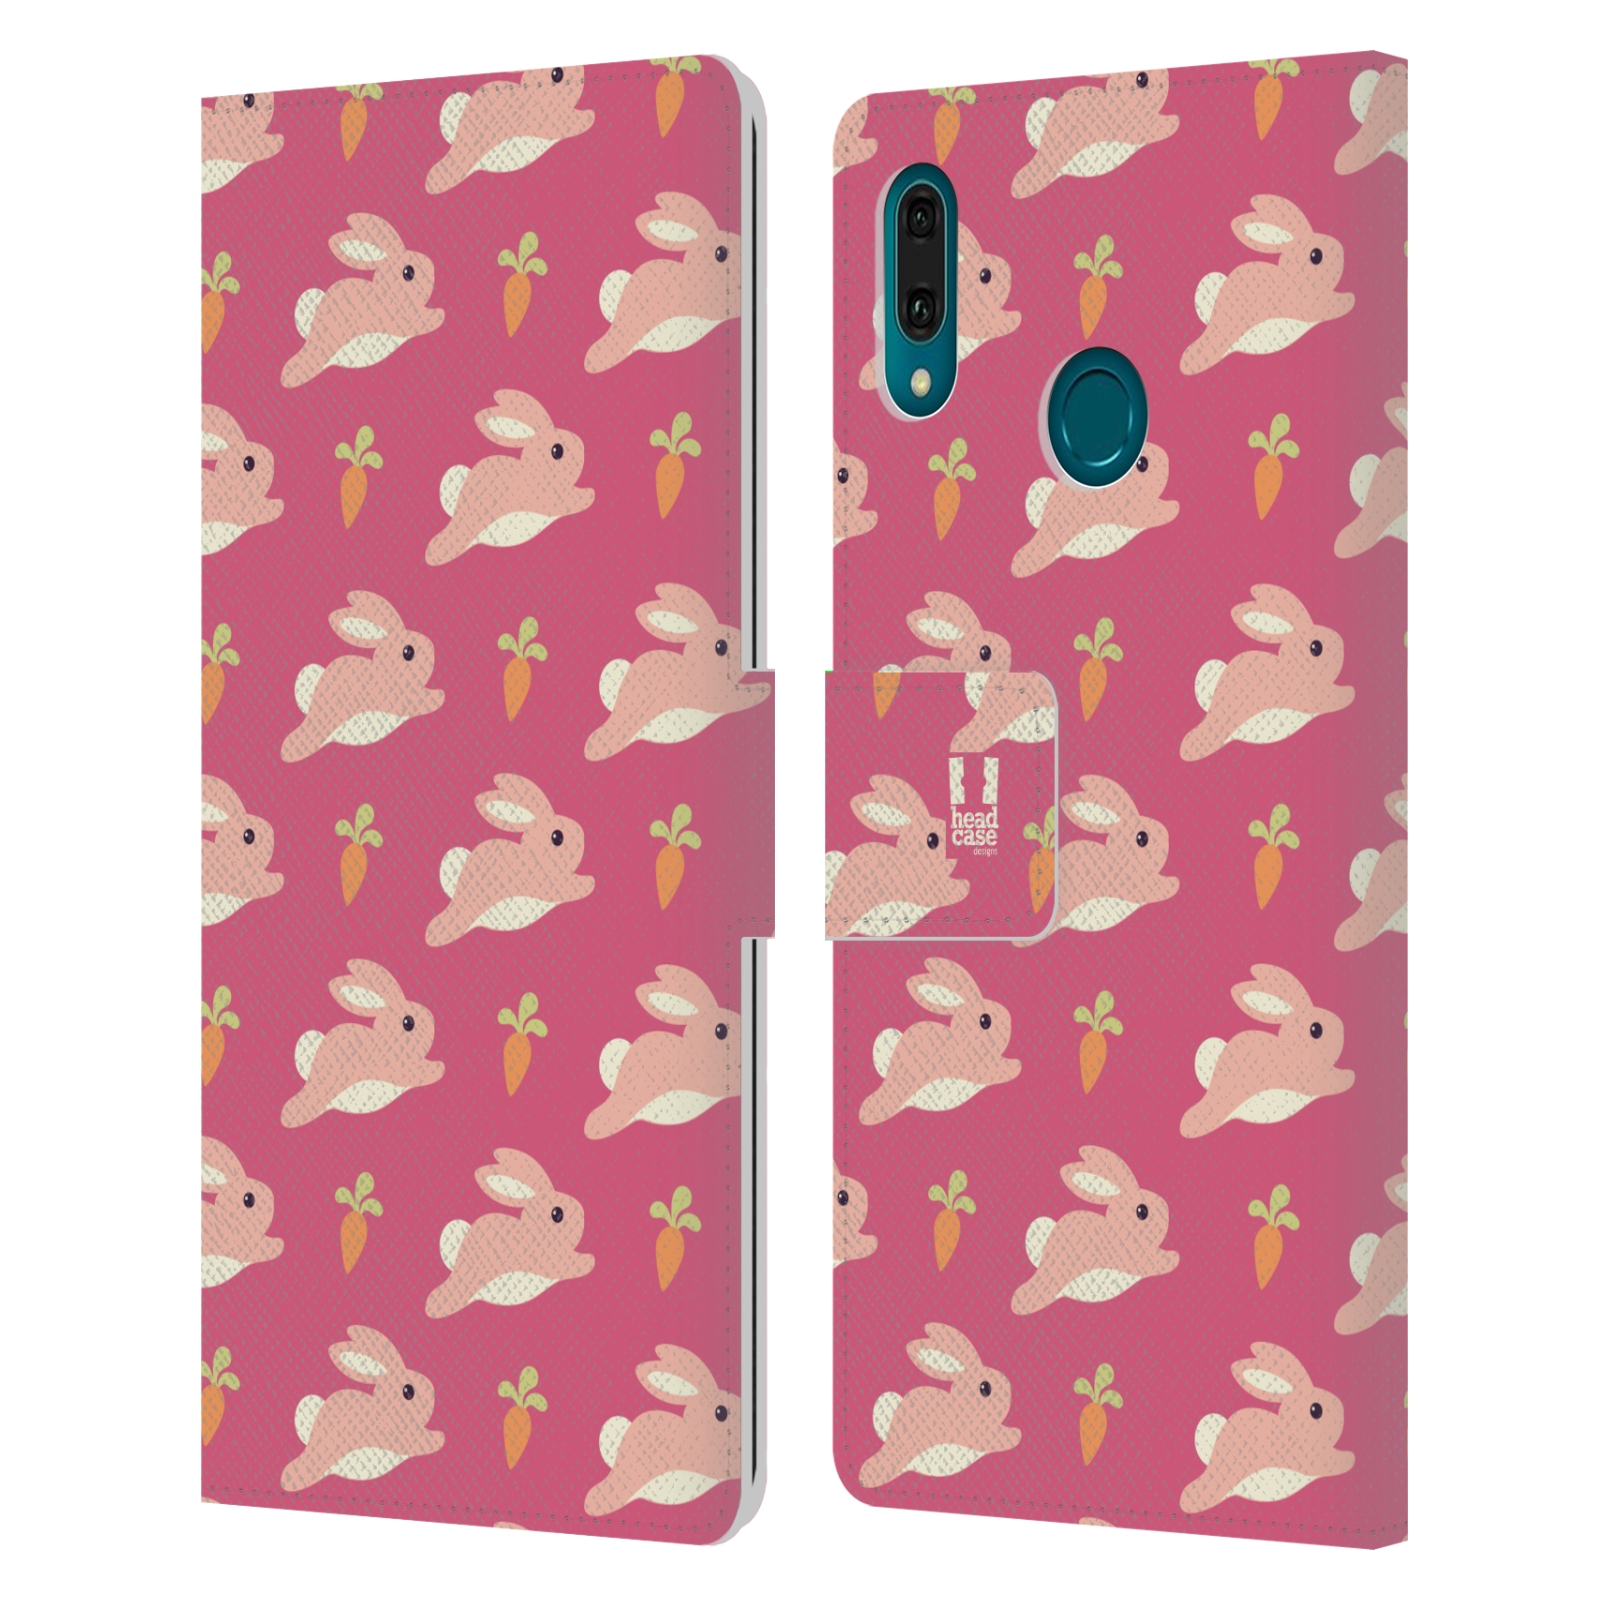 Pouzdro na mobil Huawei Y9 2019 barevný zvířecí vzor zajíček růžová